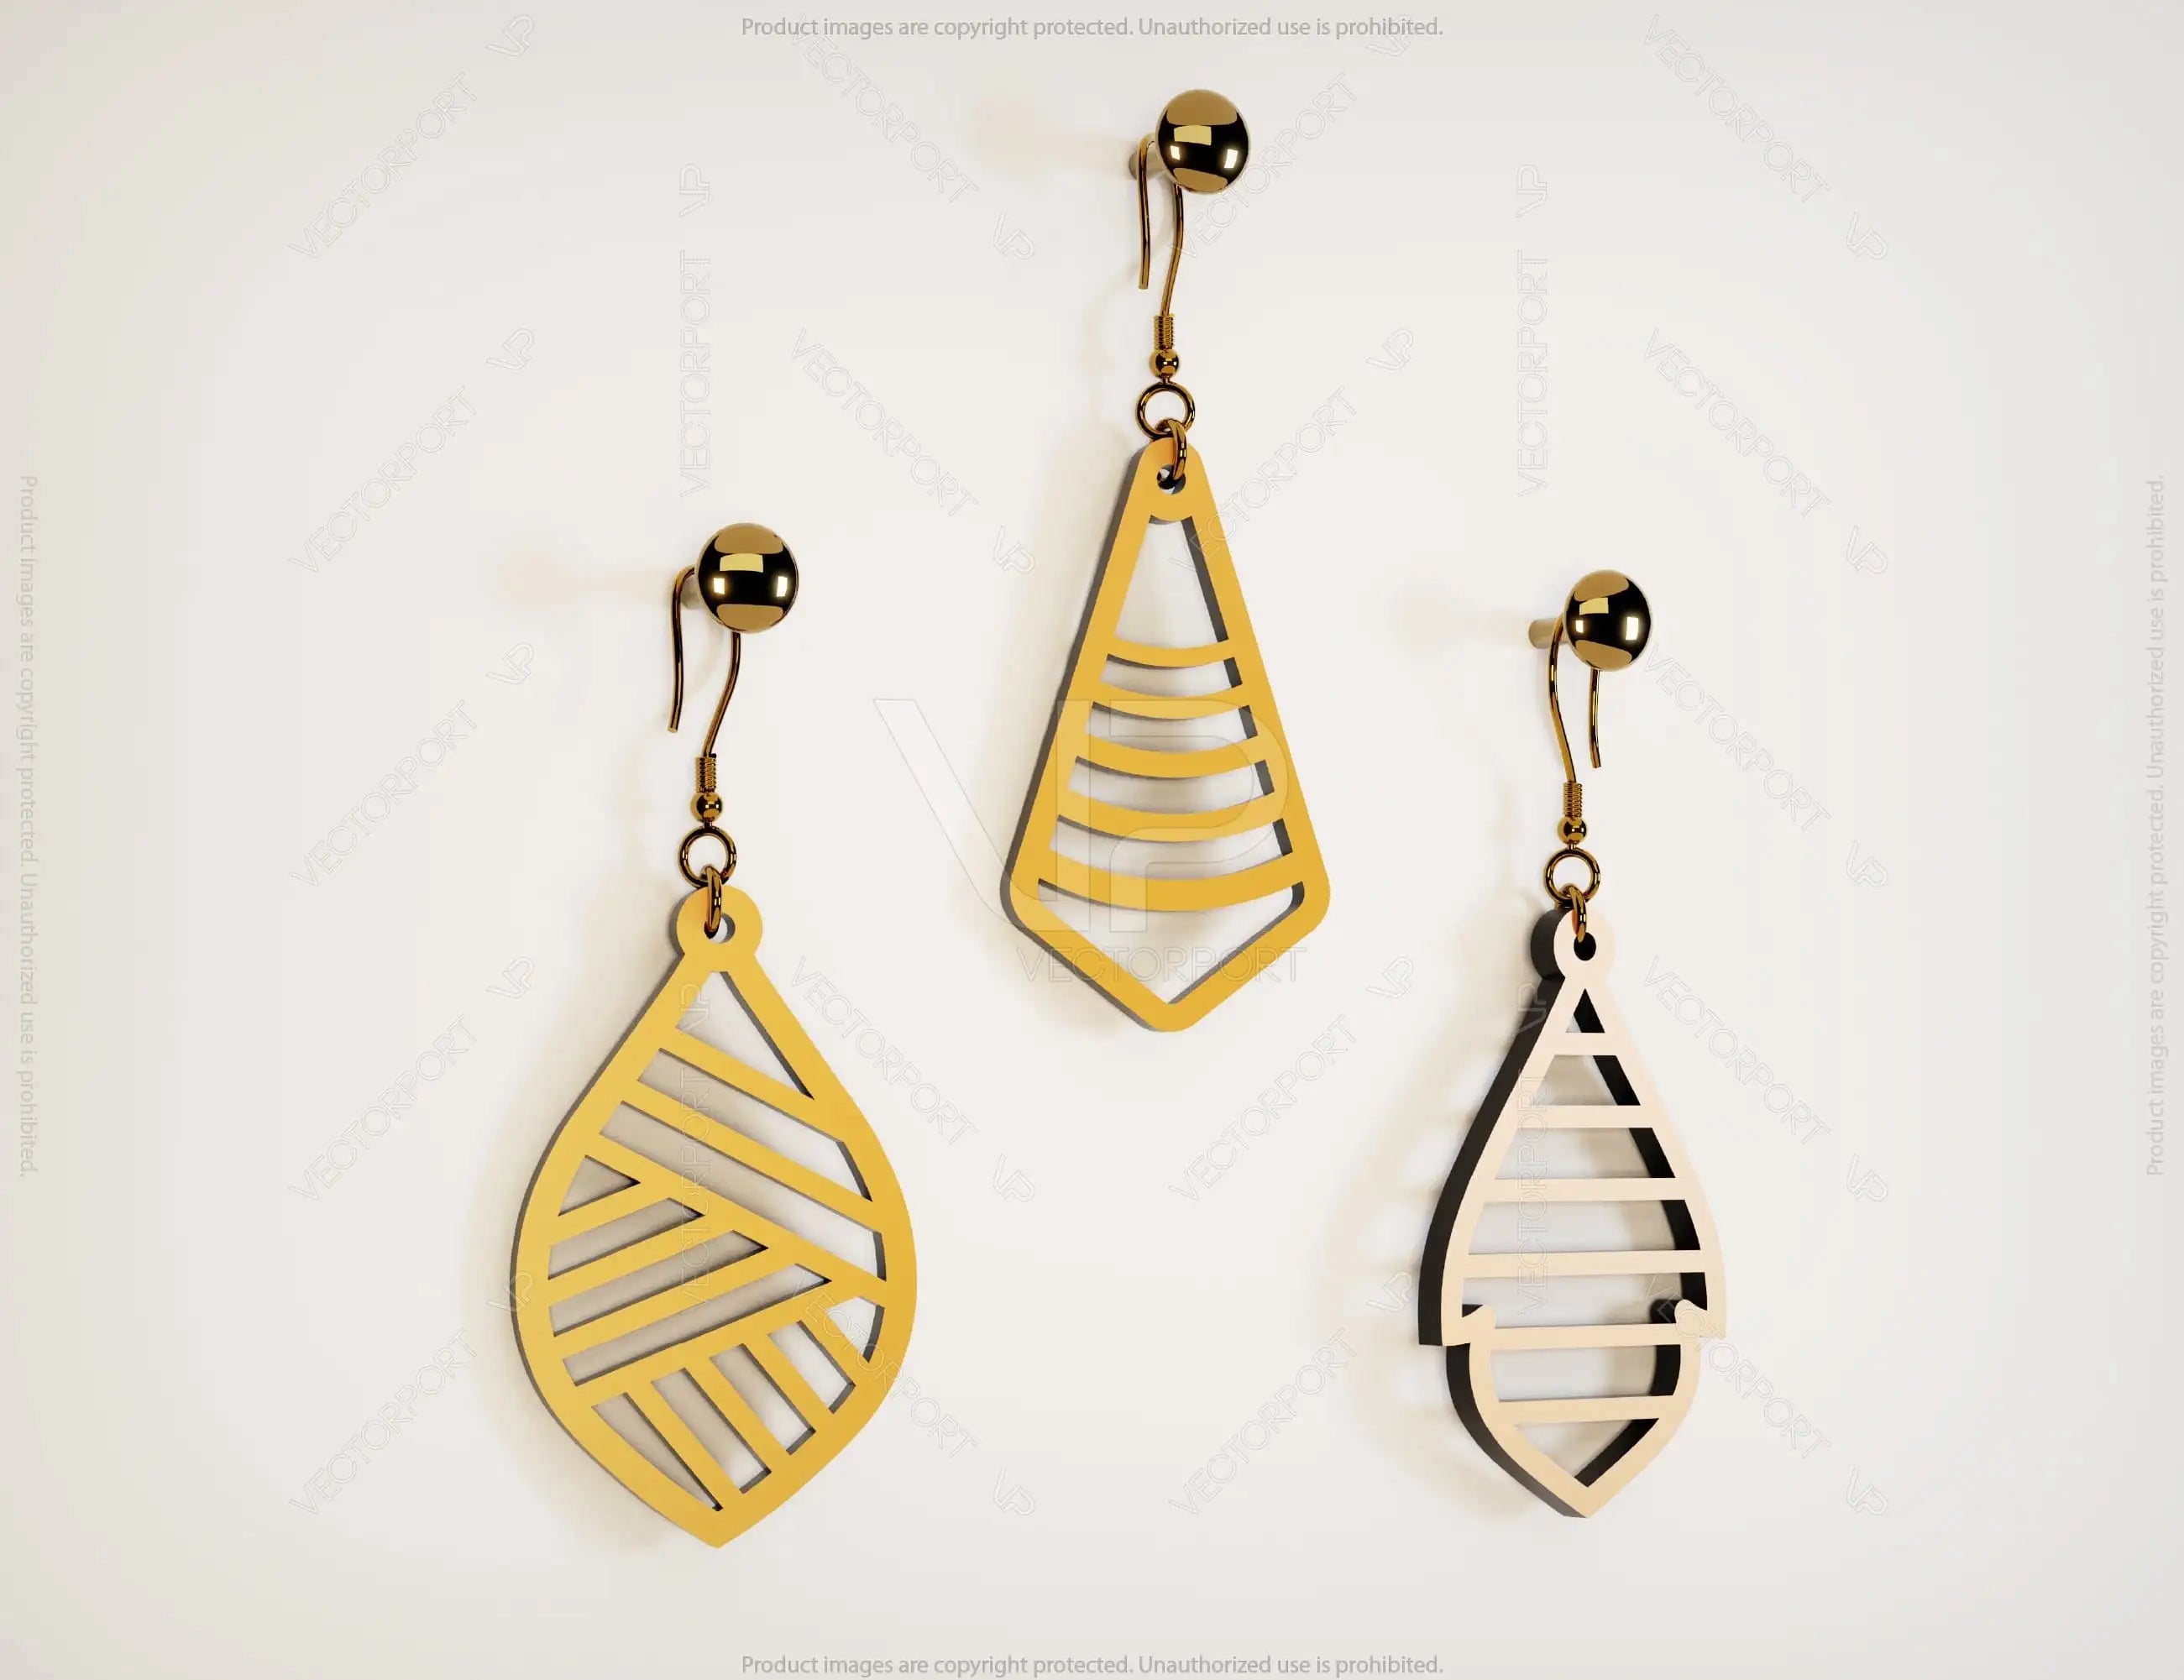 Luxury Elegant Geometric Earrings Craft Jewelry Pendants Set laser cut Cut Files, Glowforge Cut Files |#U020|